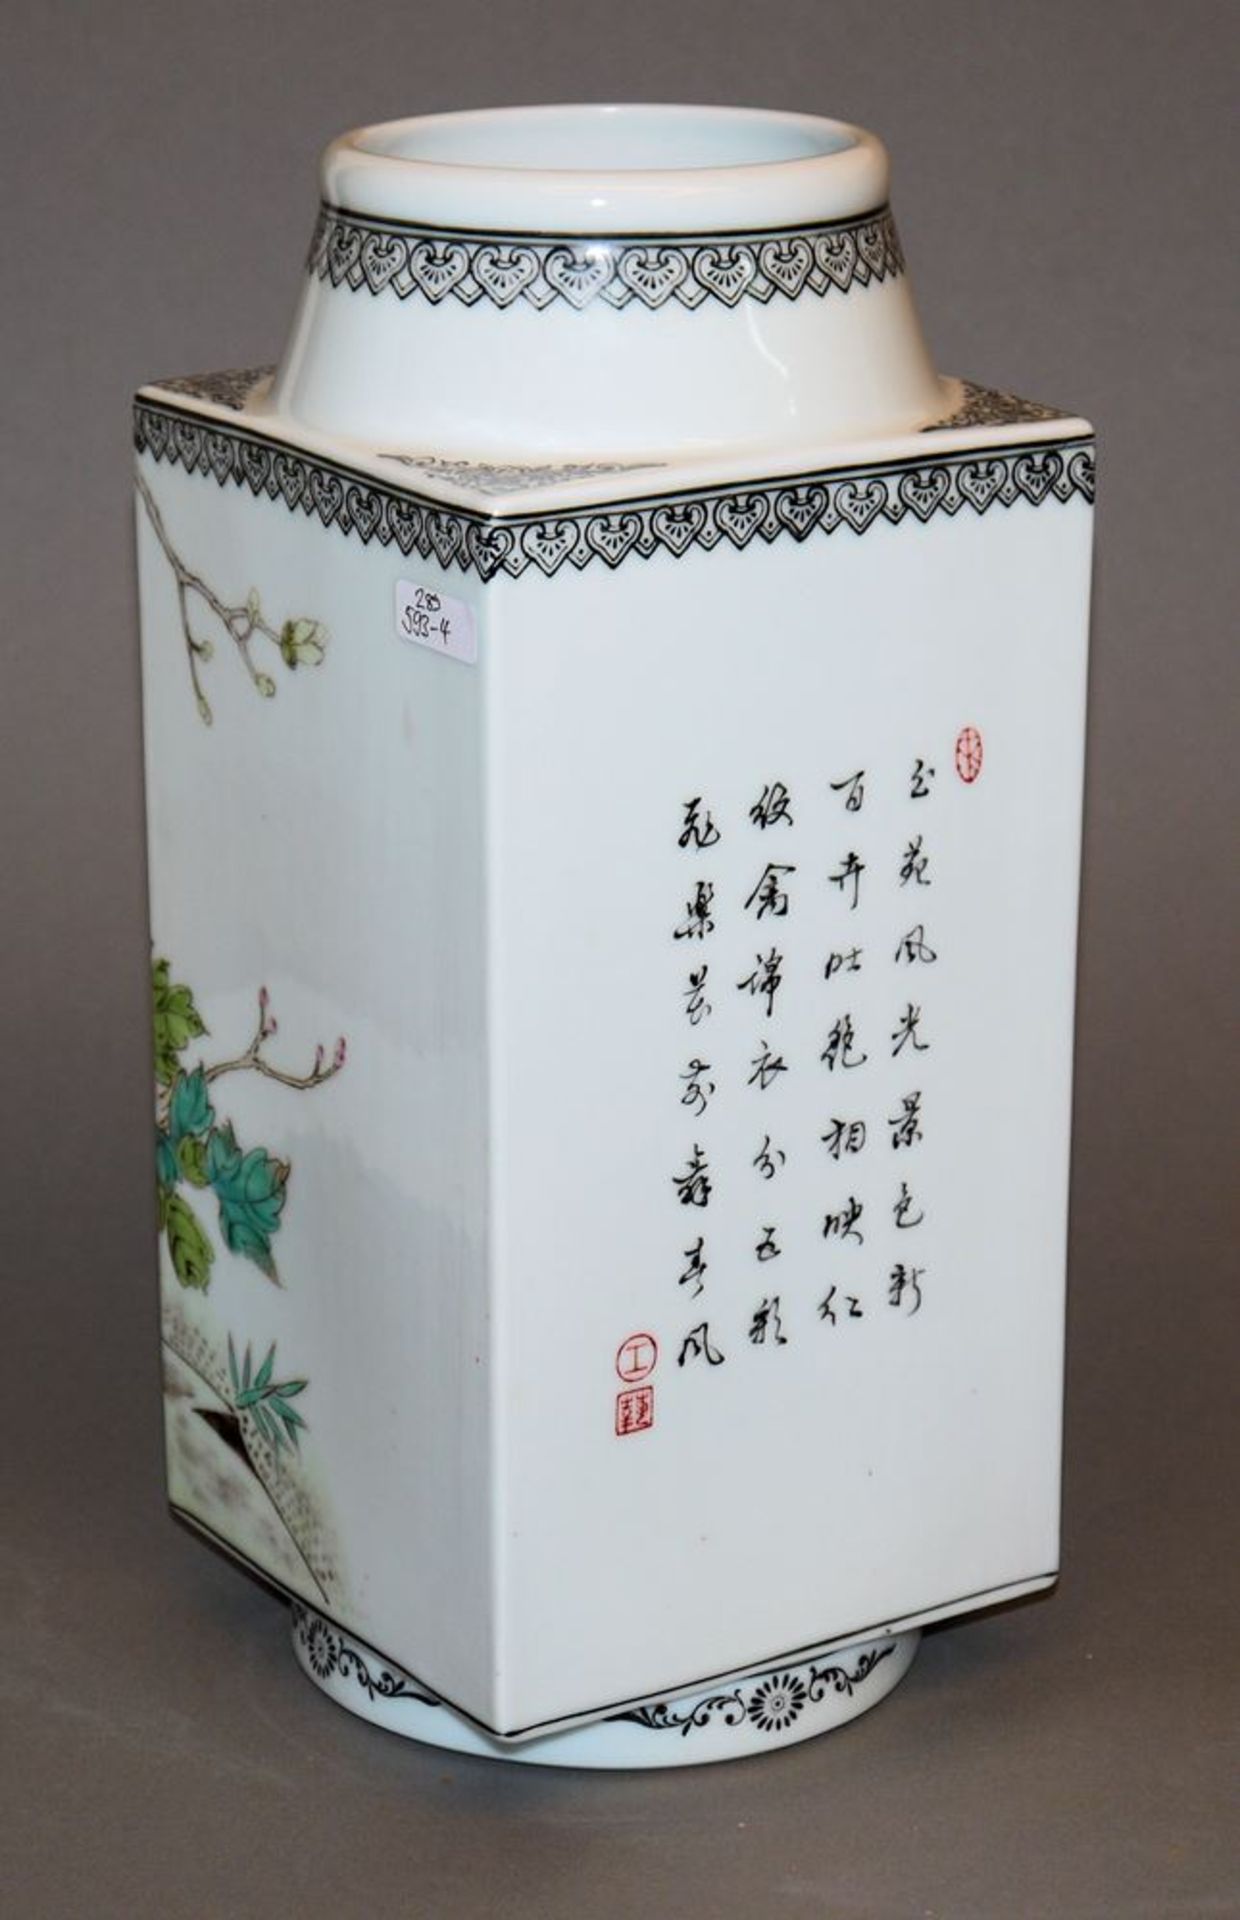 Porzellanvase in famille rose mit Pfauenpaar, Jingdezhen, China 20. Jh. - Image 2 of 3